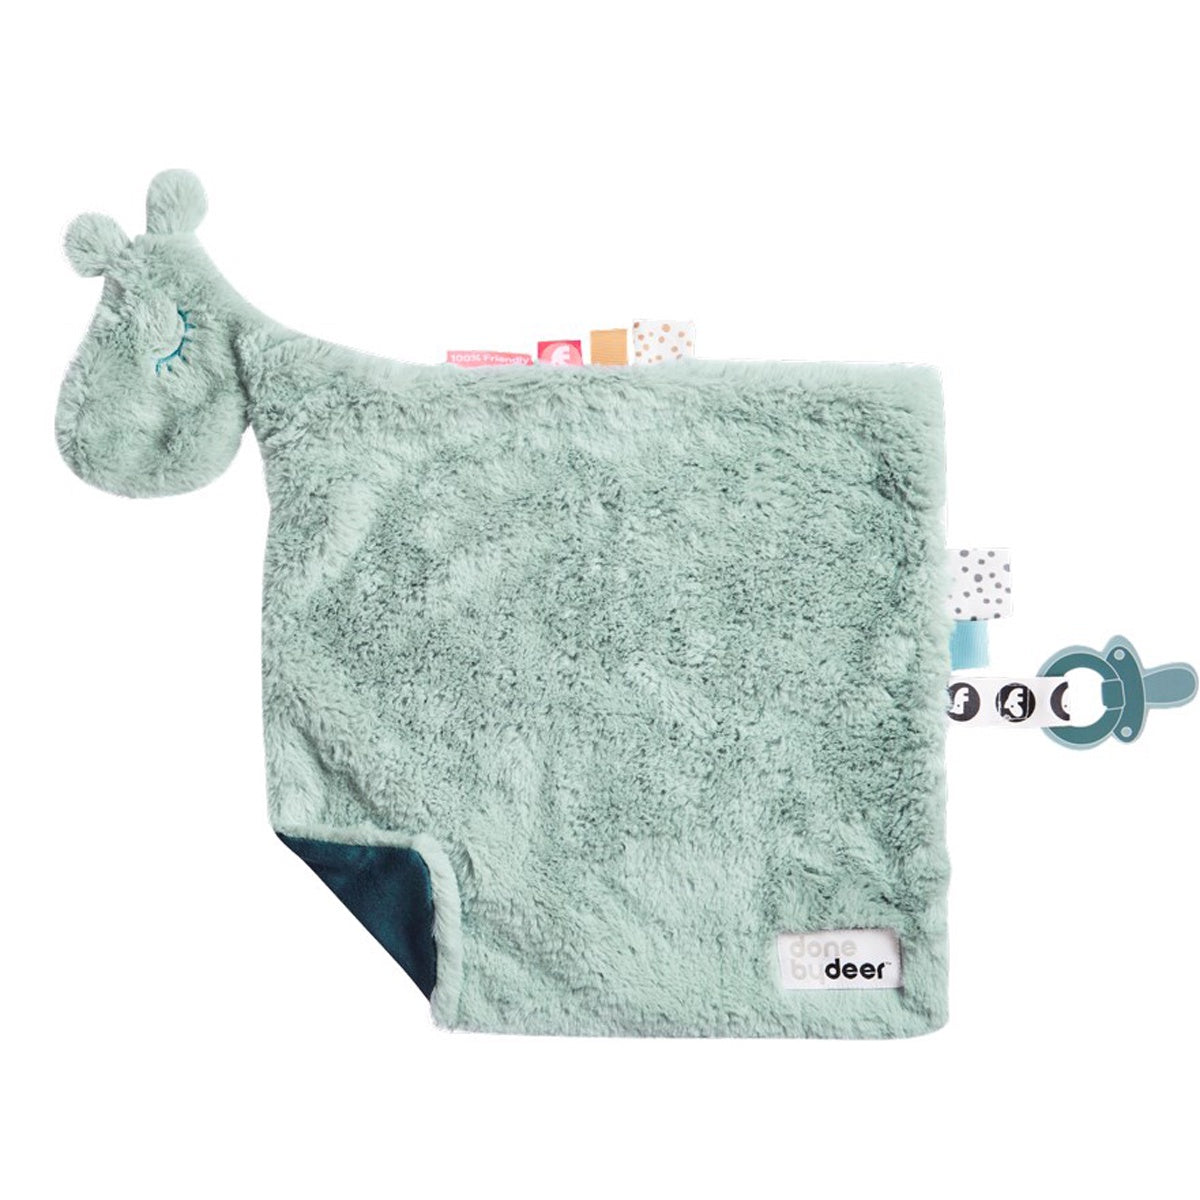 Deer Industries Done by Deer Comfort Blanket Raffi Blue. Baby soother plush giraffe, best gift for baby boy or girl. 